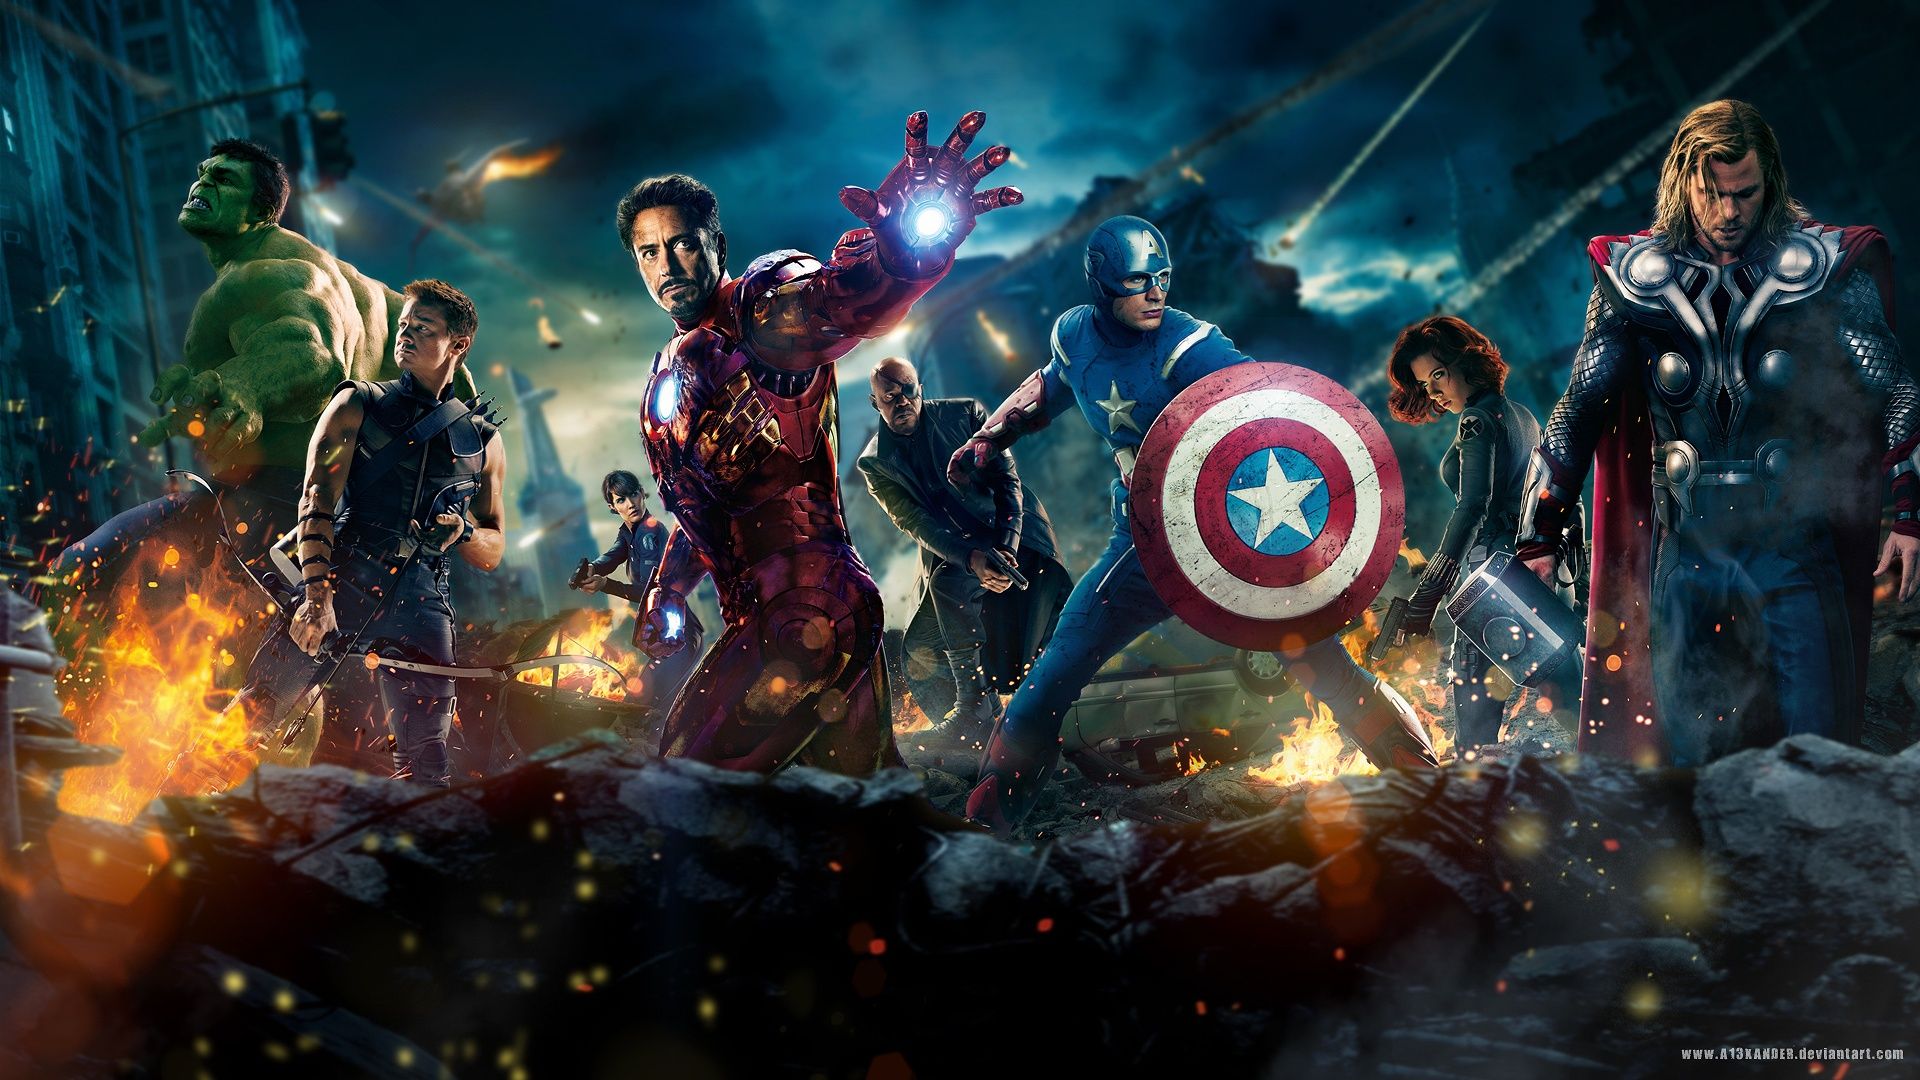 Avengers 4 Background